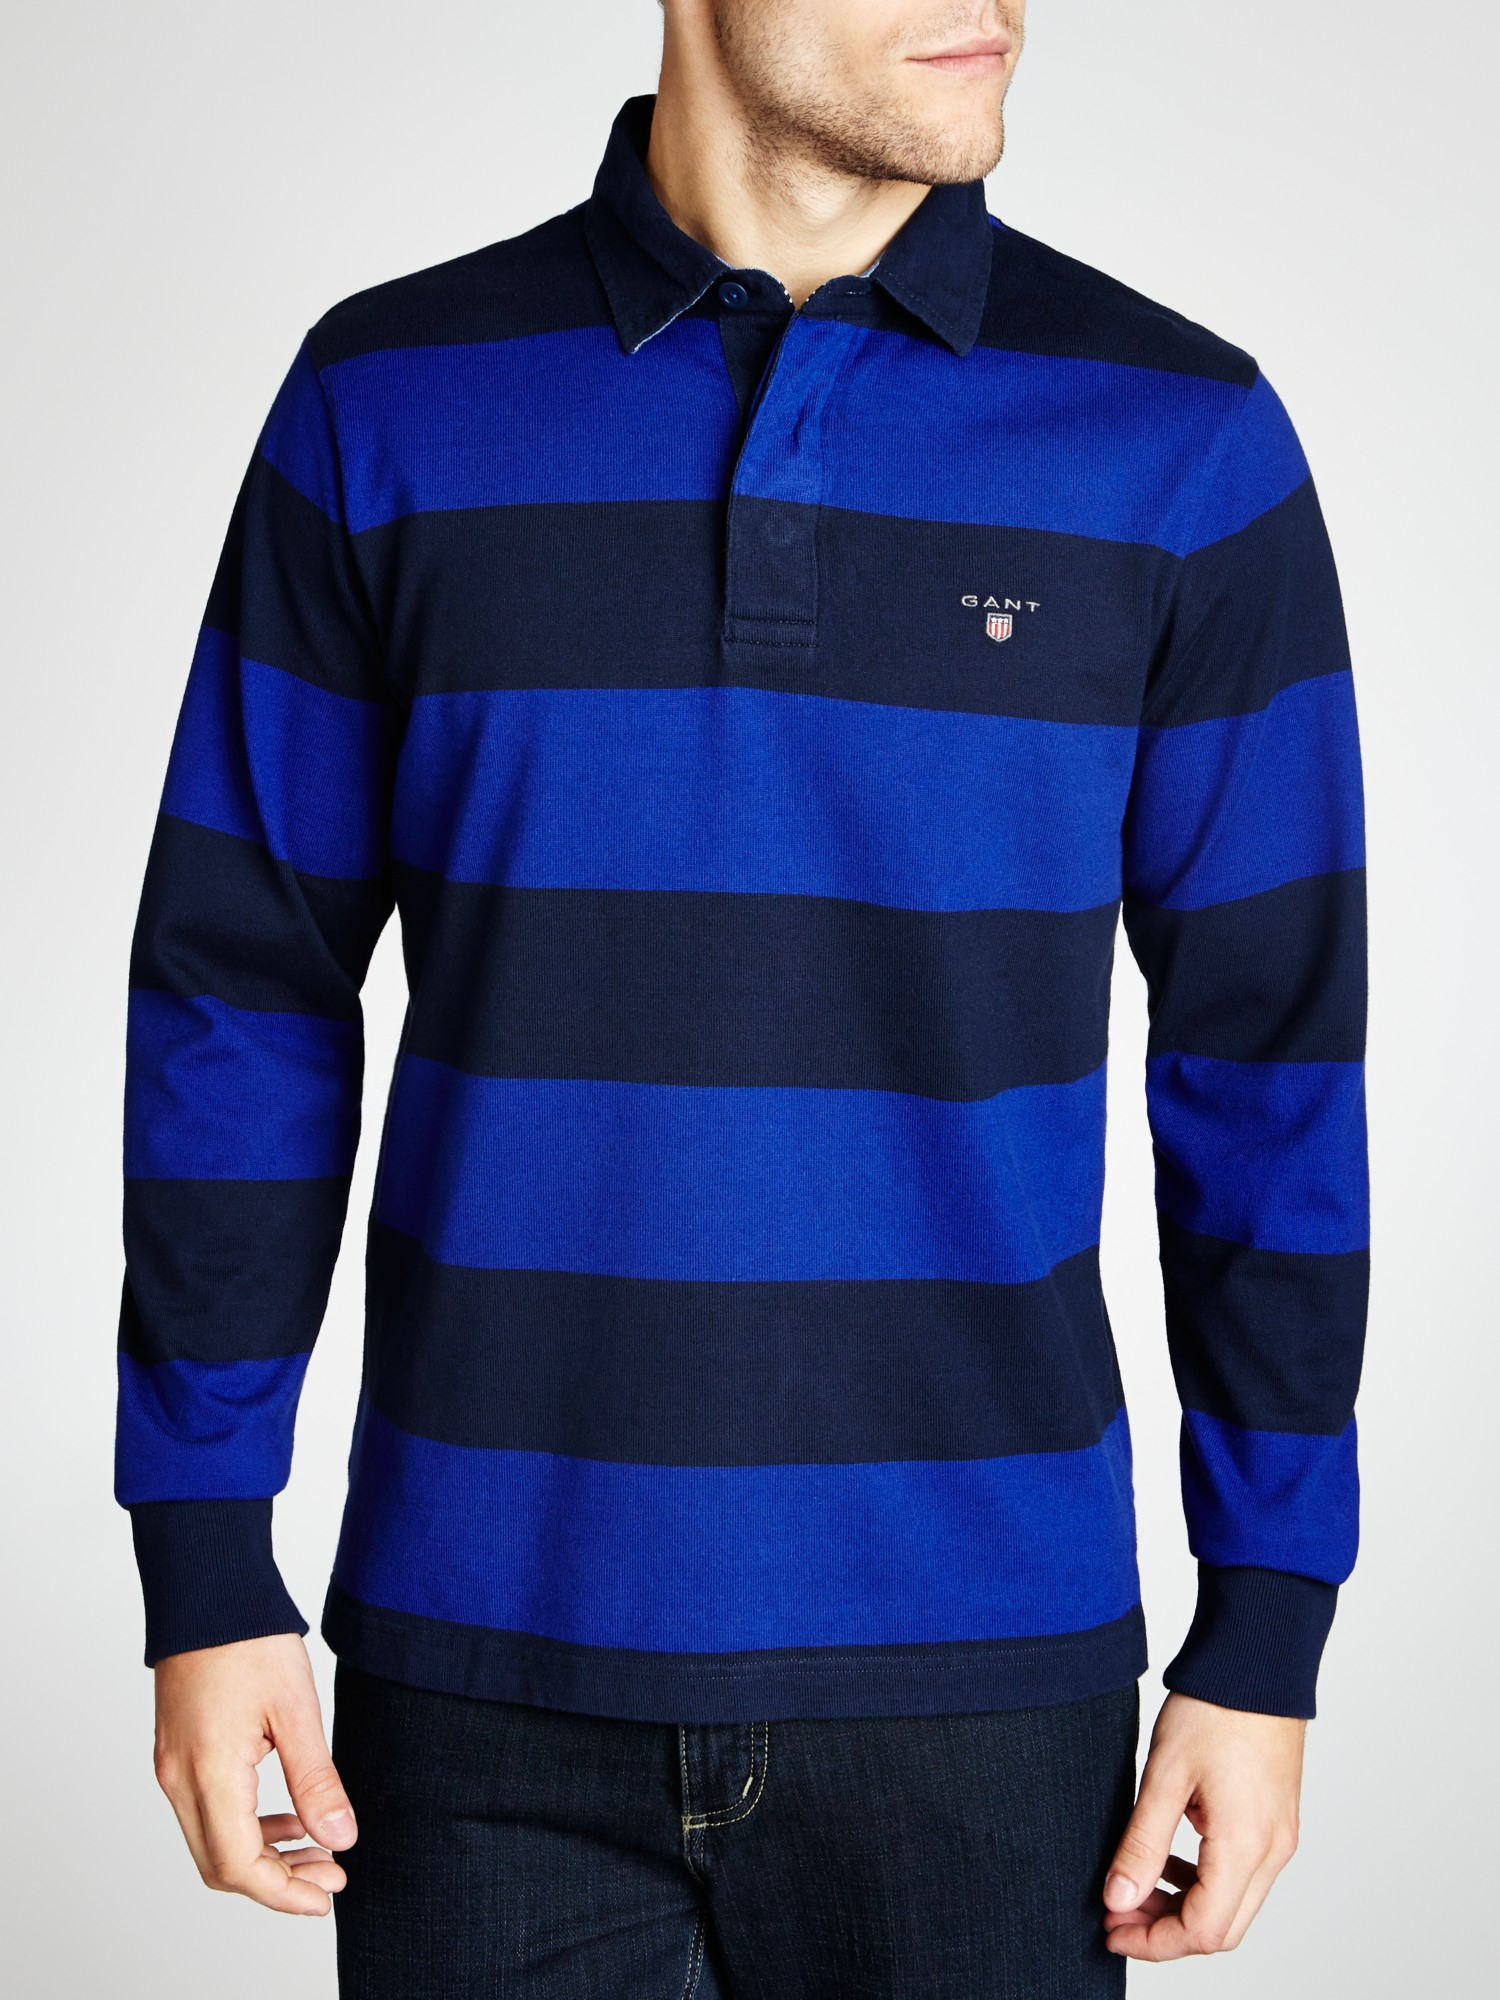 GANT Bar Stripe Long Sleeve Rugby Shirt in Blue for Men - Lyst